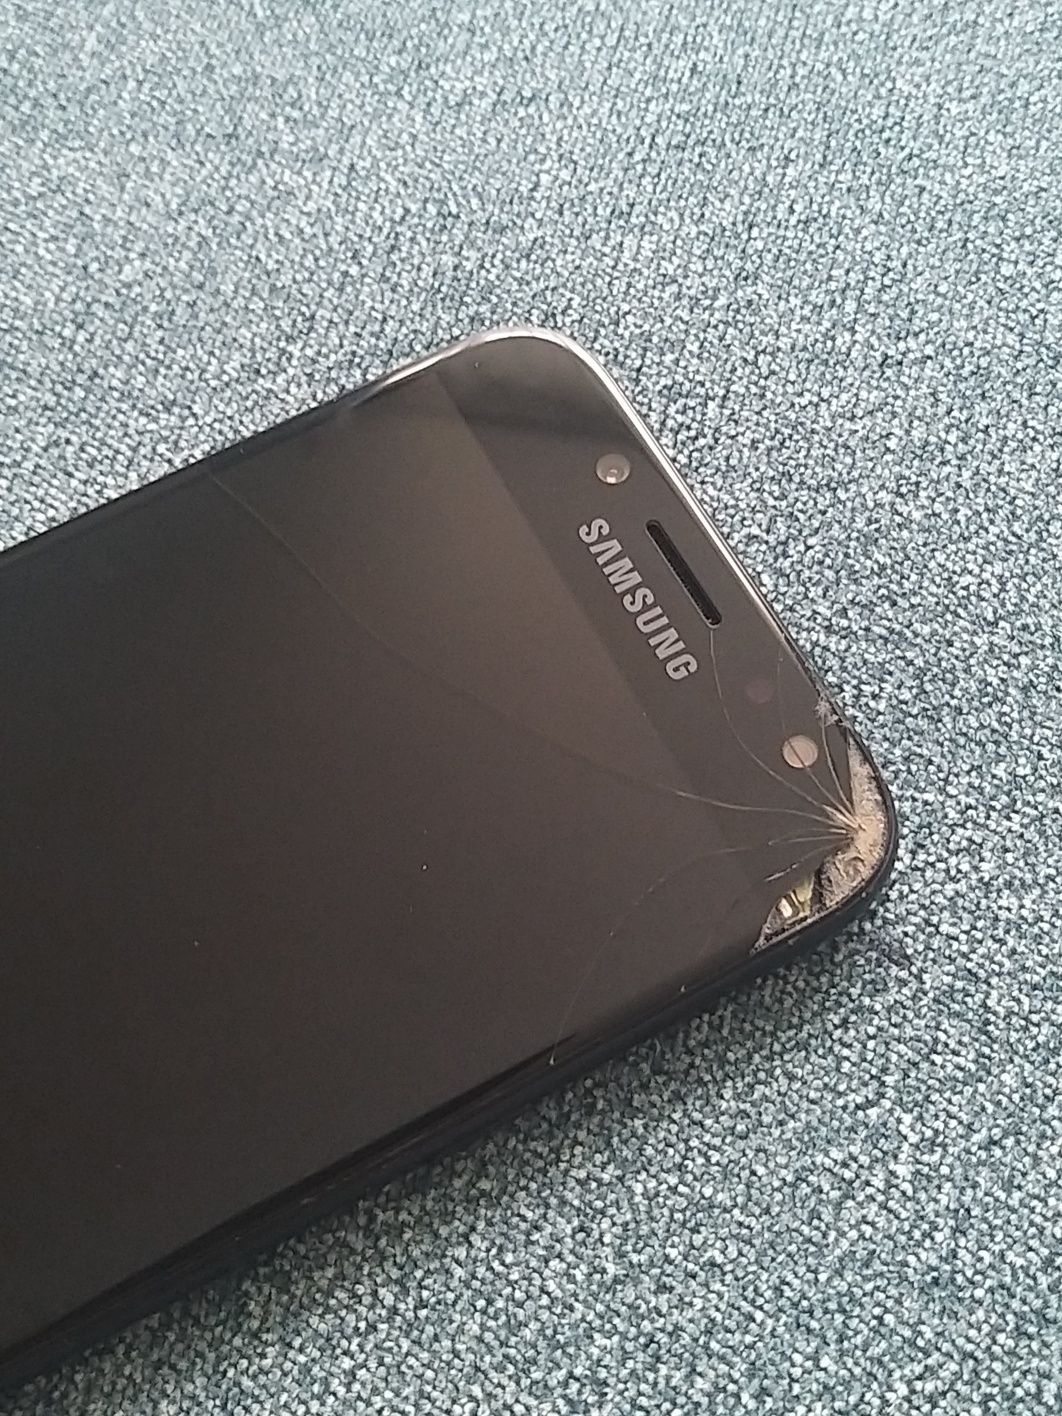 Samsung J5 negru